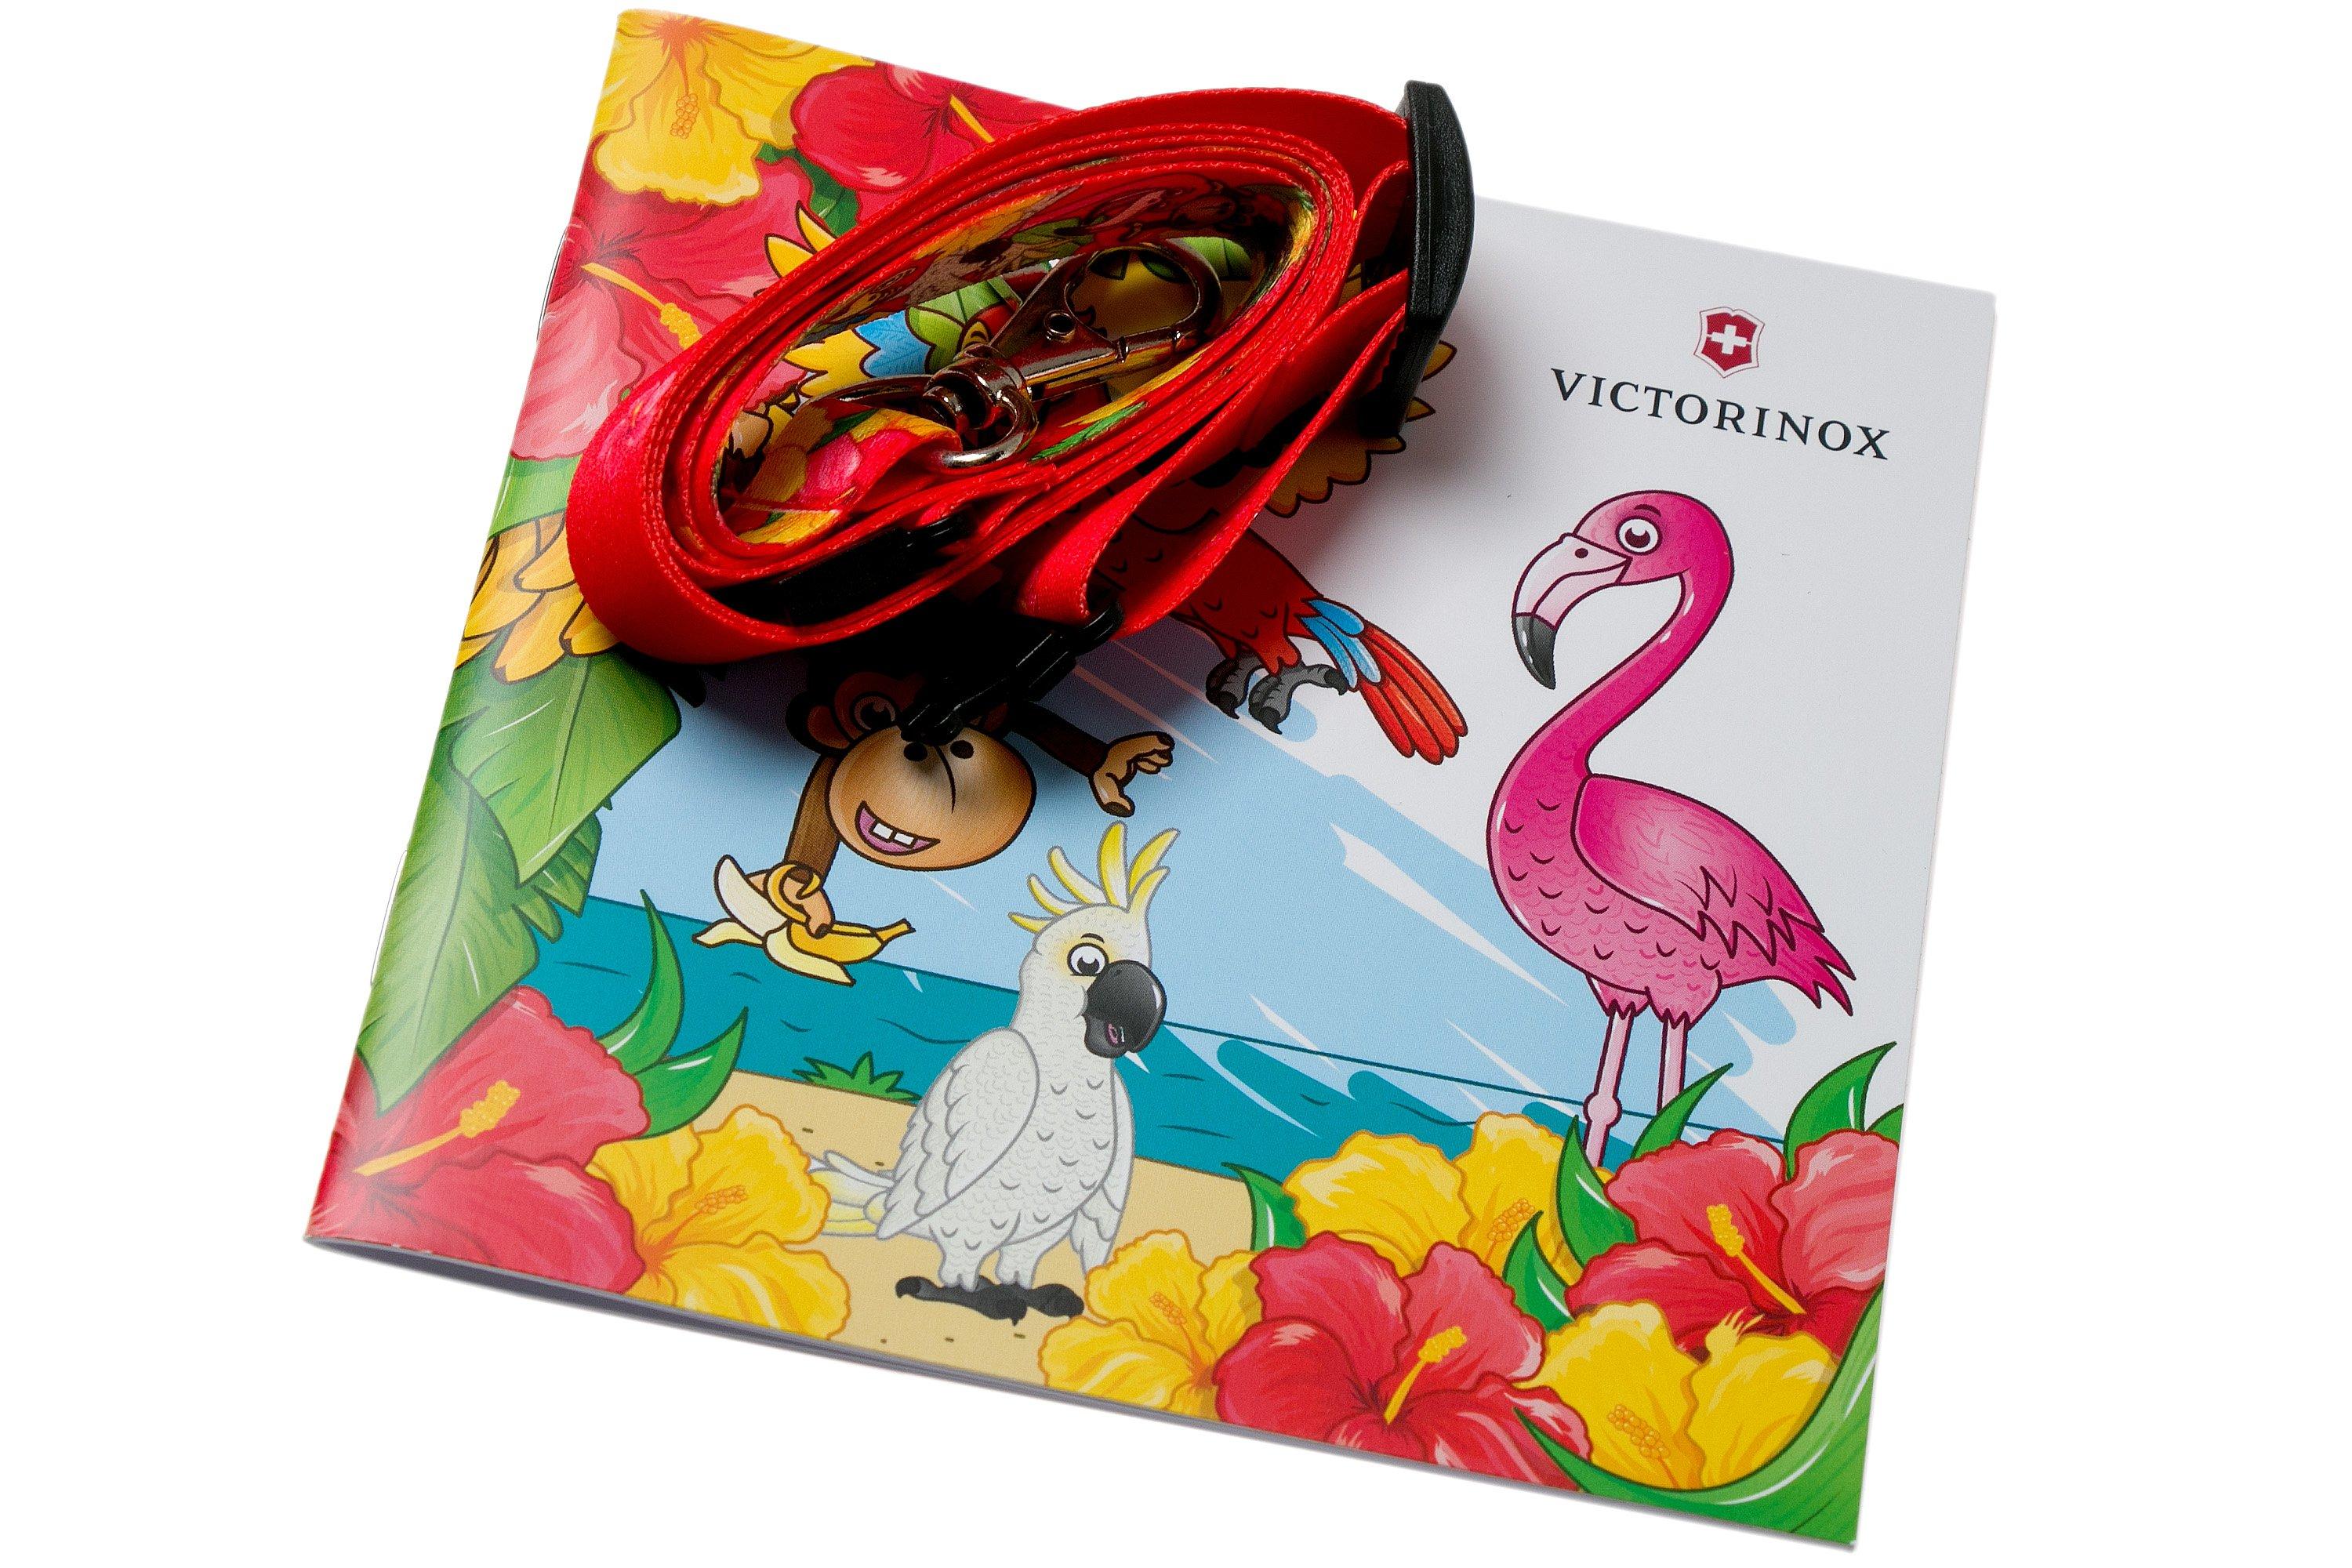 Victorinox My First Victorinox, Parrot edition 0.2373.E3 children's .